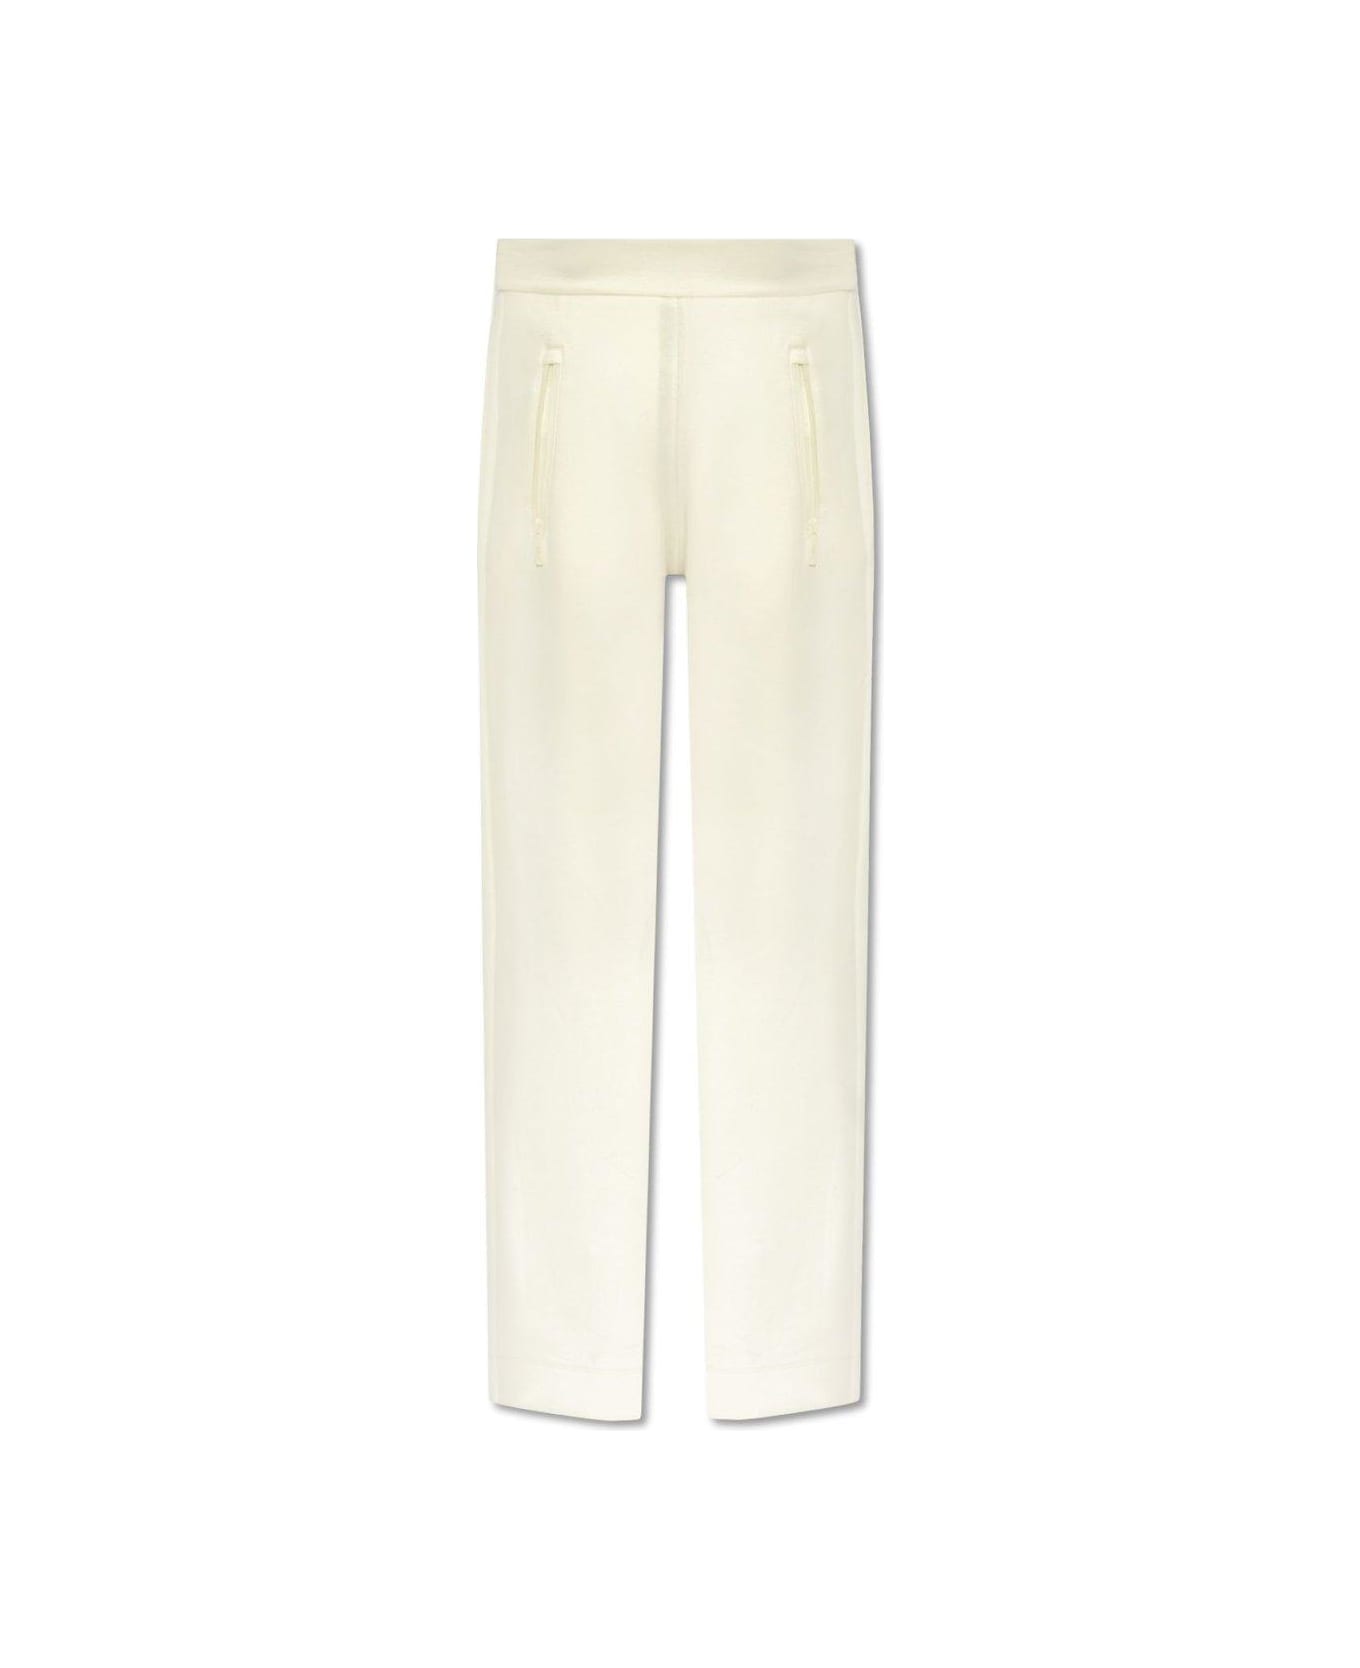 Emporio Armani Sweatpants With Pockets - Bianco caldo ボトムス